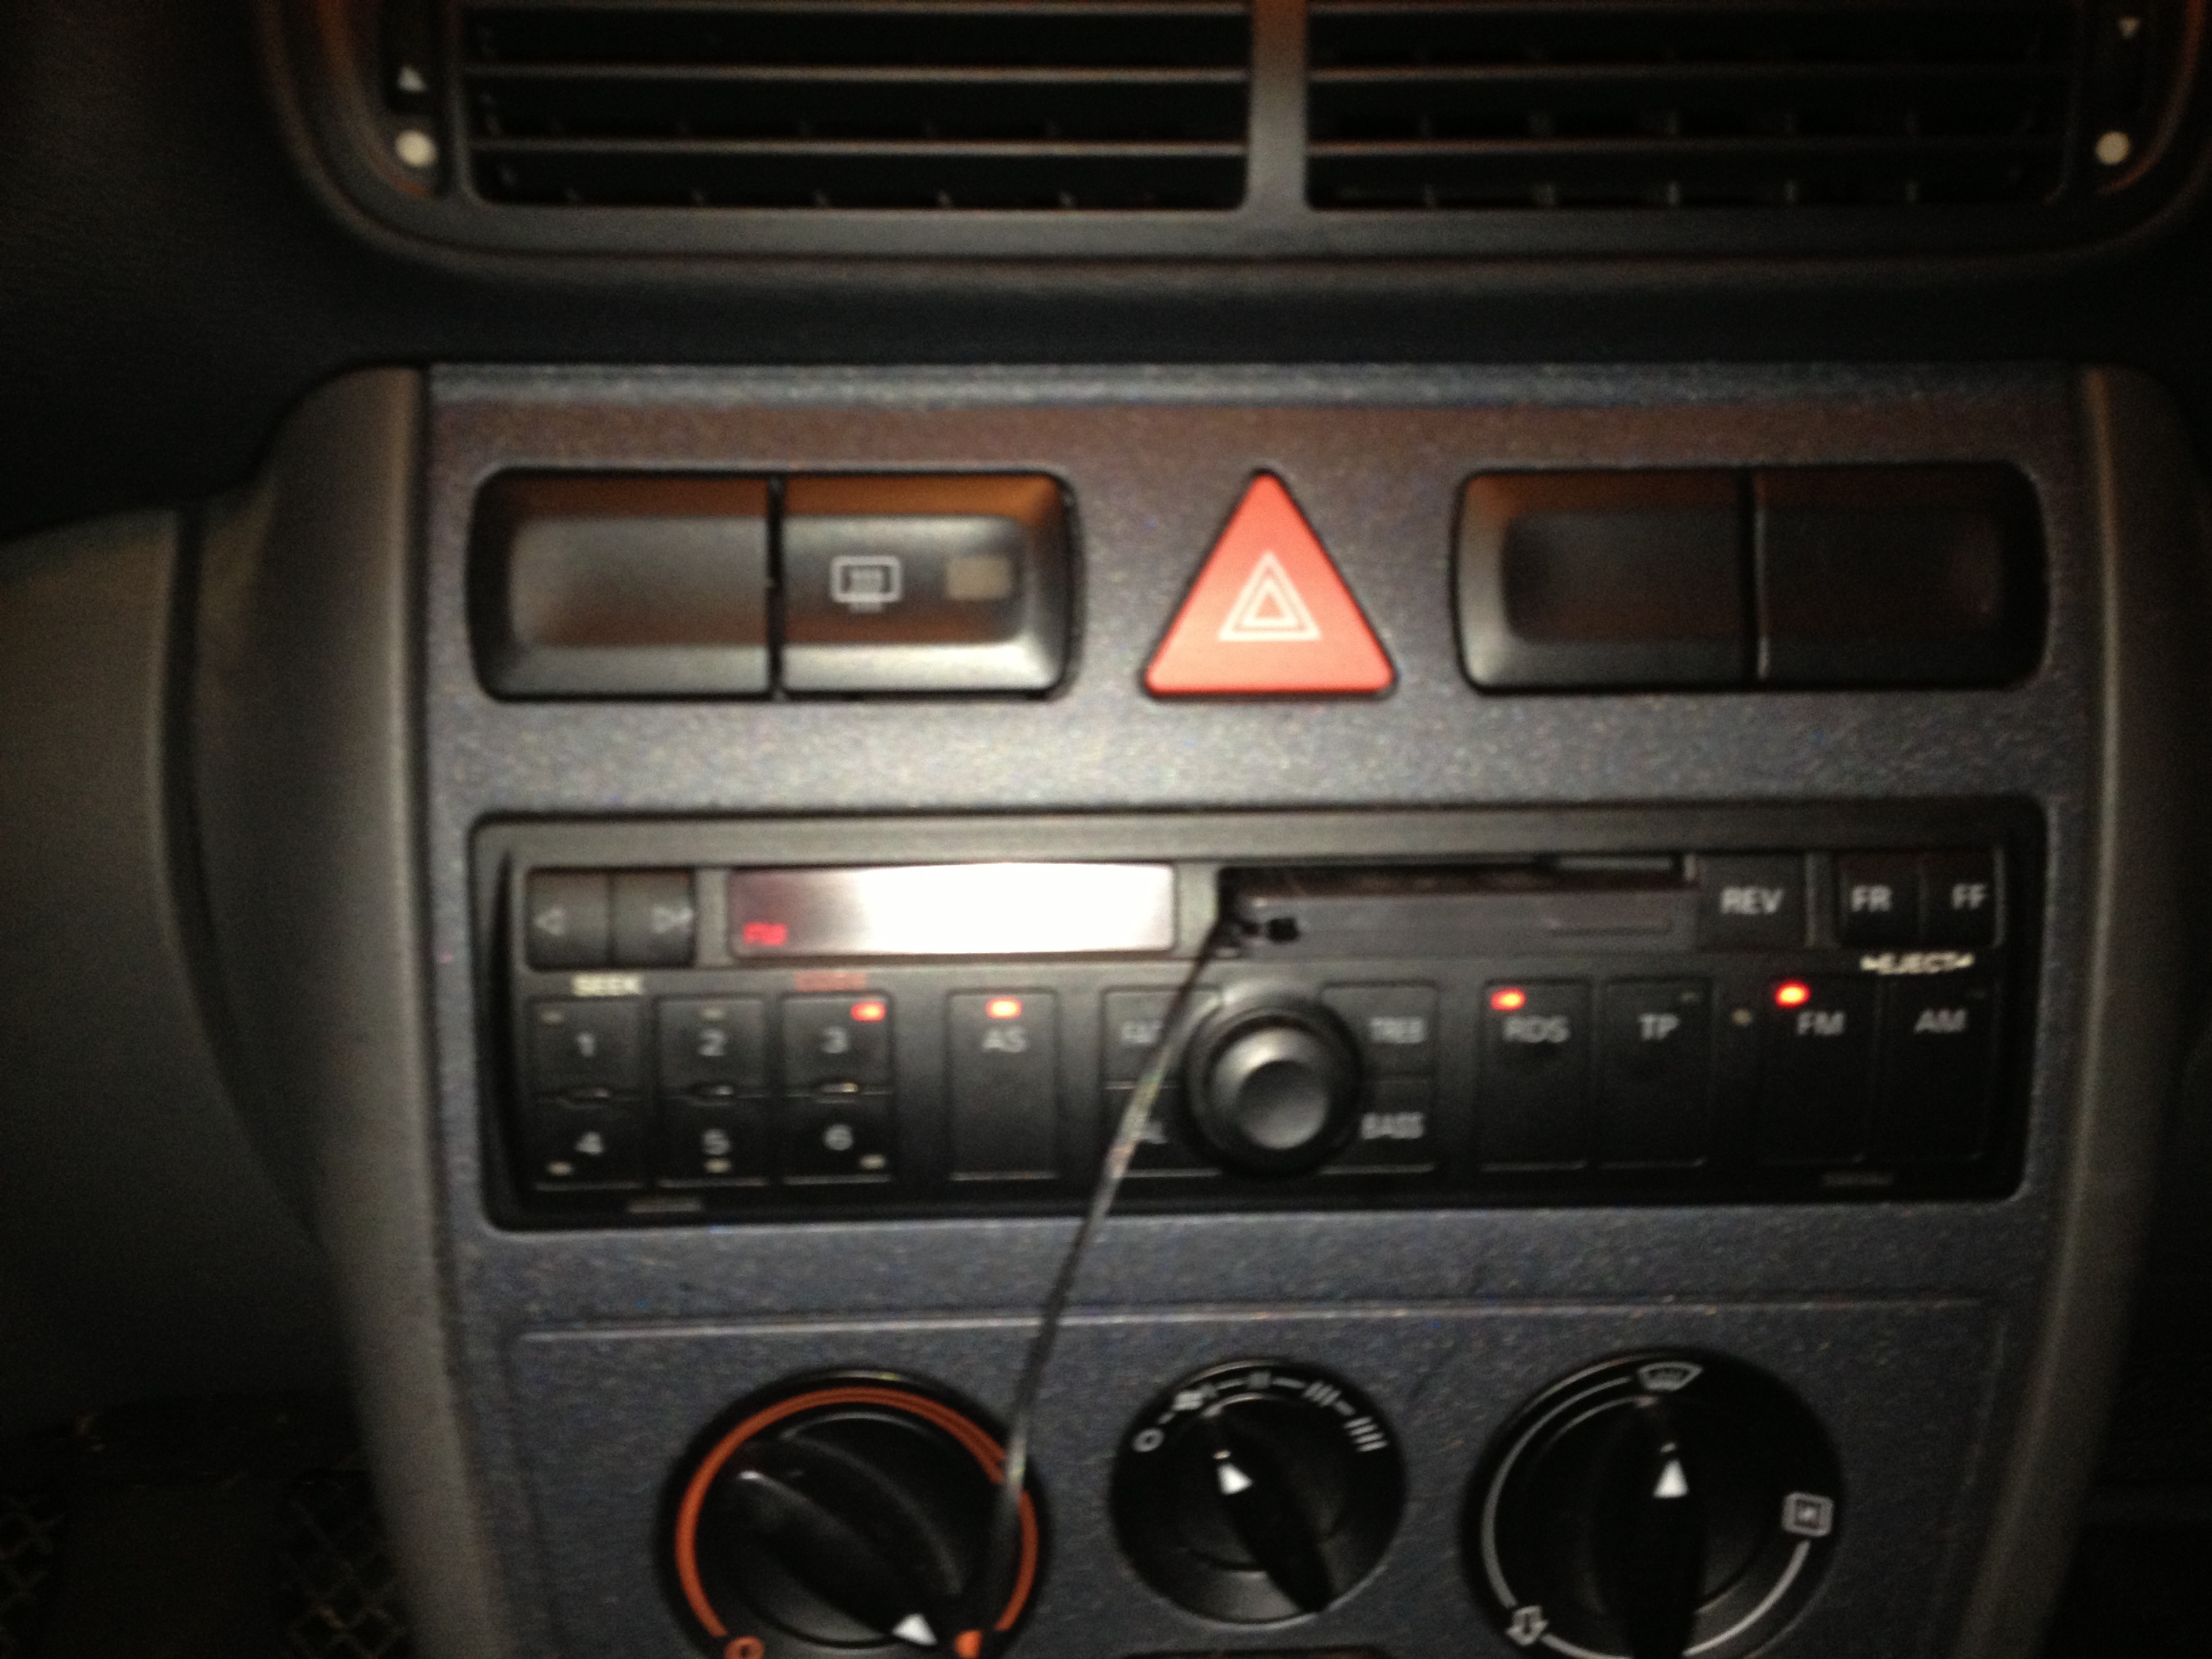 8L] Audi A3 Bj 98 1.6 neues Radio - HiFi, Car-Alarm und Elektrik (8L) -  A3-Freunde